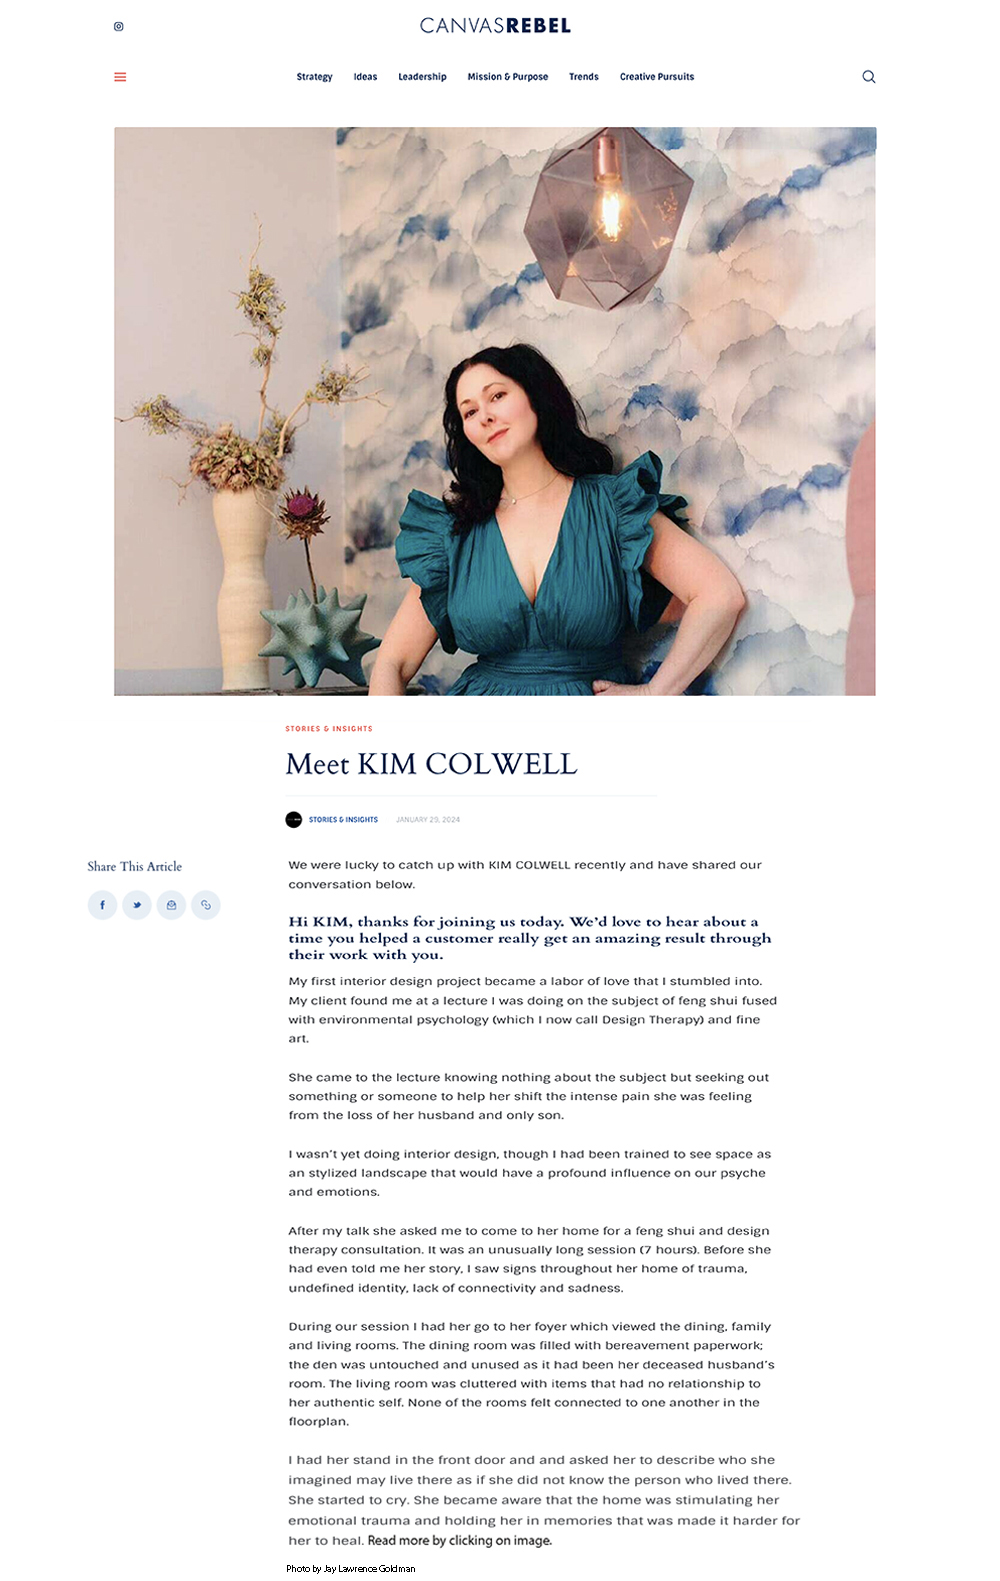 Interior designer story: Kim Colwell shares how she became an interior designer for Rebel Image ,magazine.